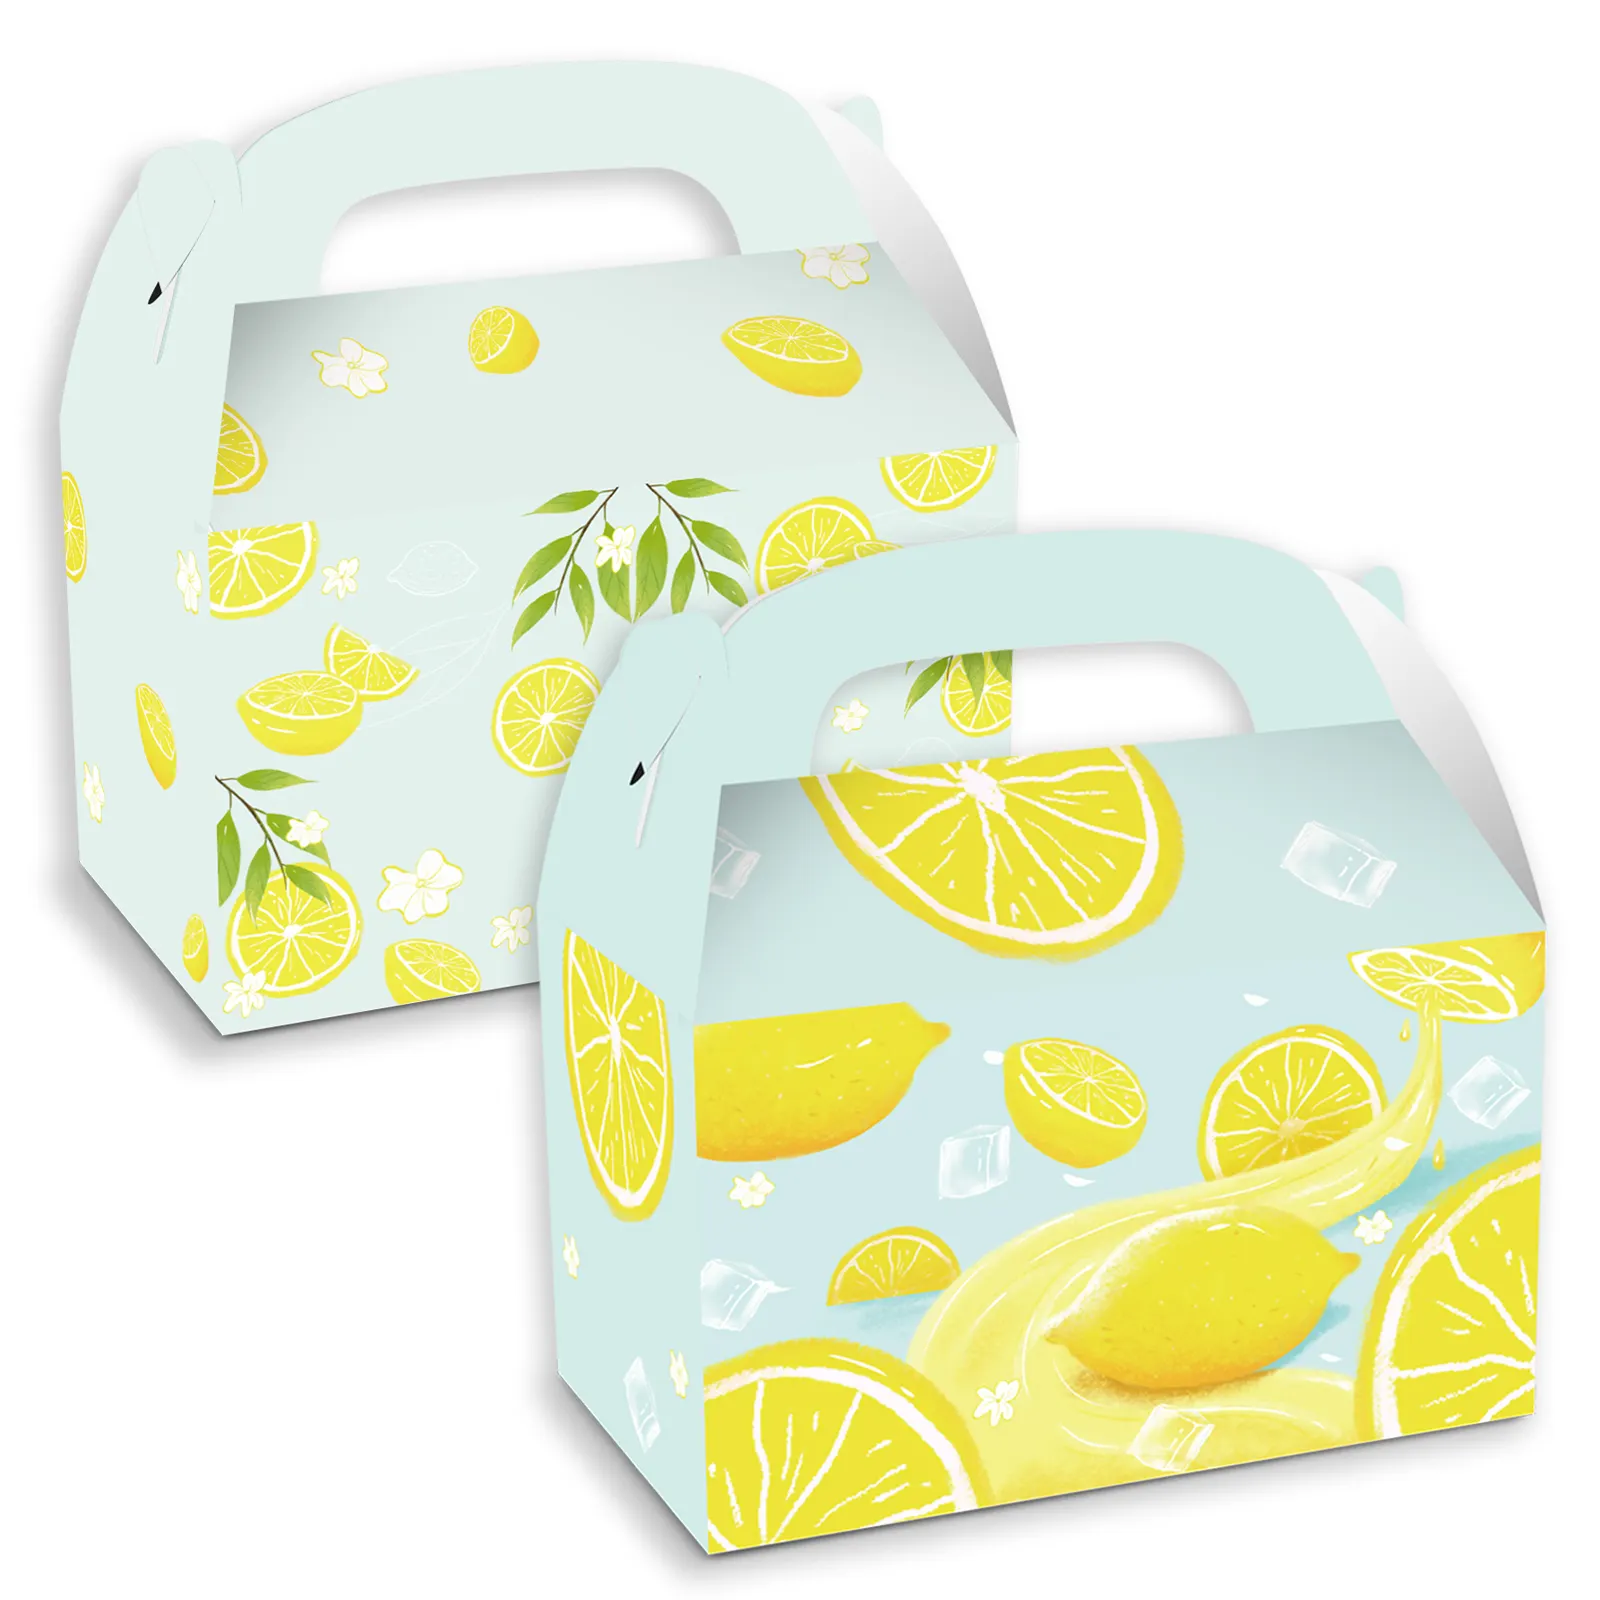 Yellow Lemon printed Design Party Foldable Kids Goodies Dessert Boxes Kraft Paper Gift Boxes